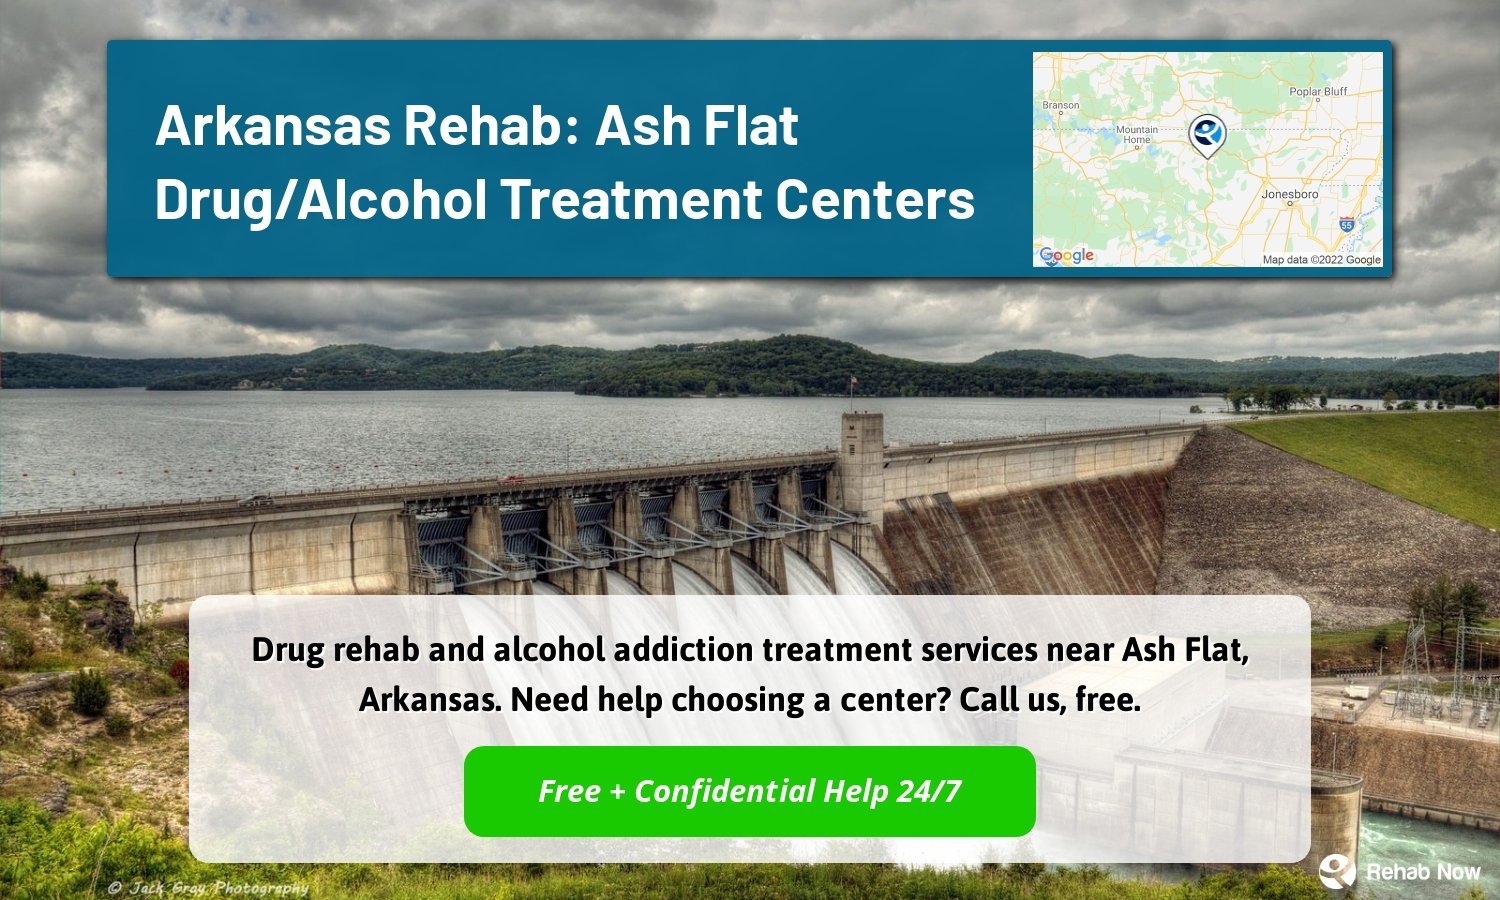 Drug rehab and alcohol addiction treatment services near Ash Flat, Arkansas. Need help choosing a center? Call us, free.